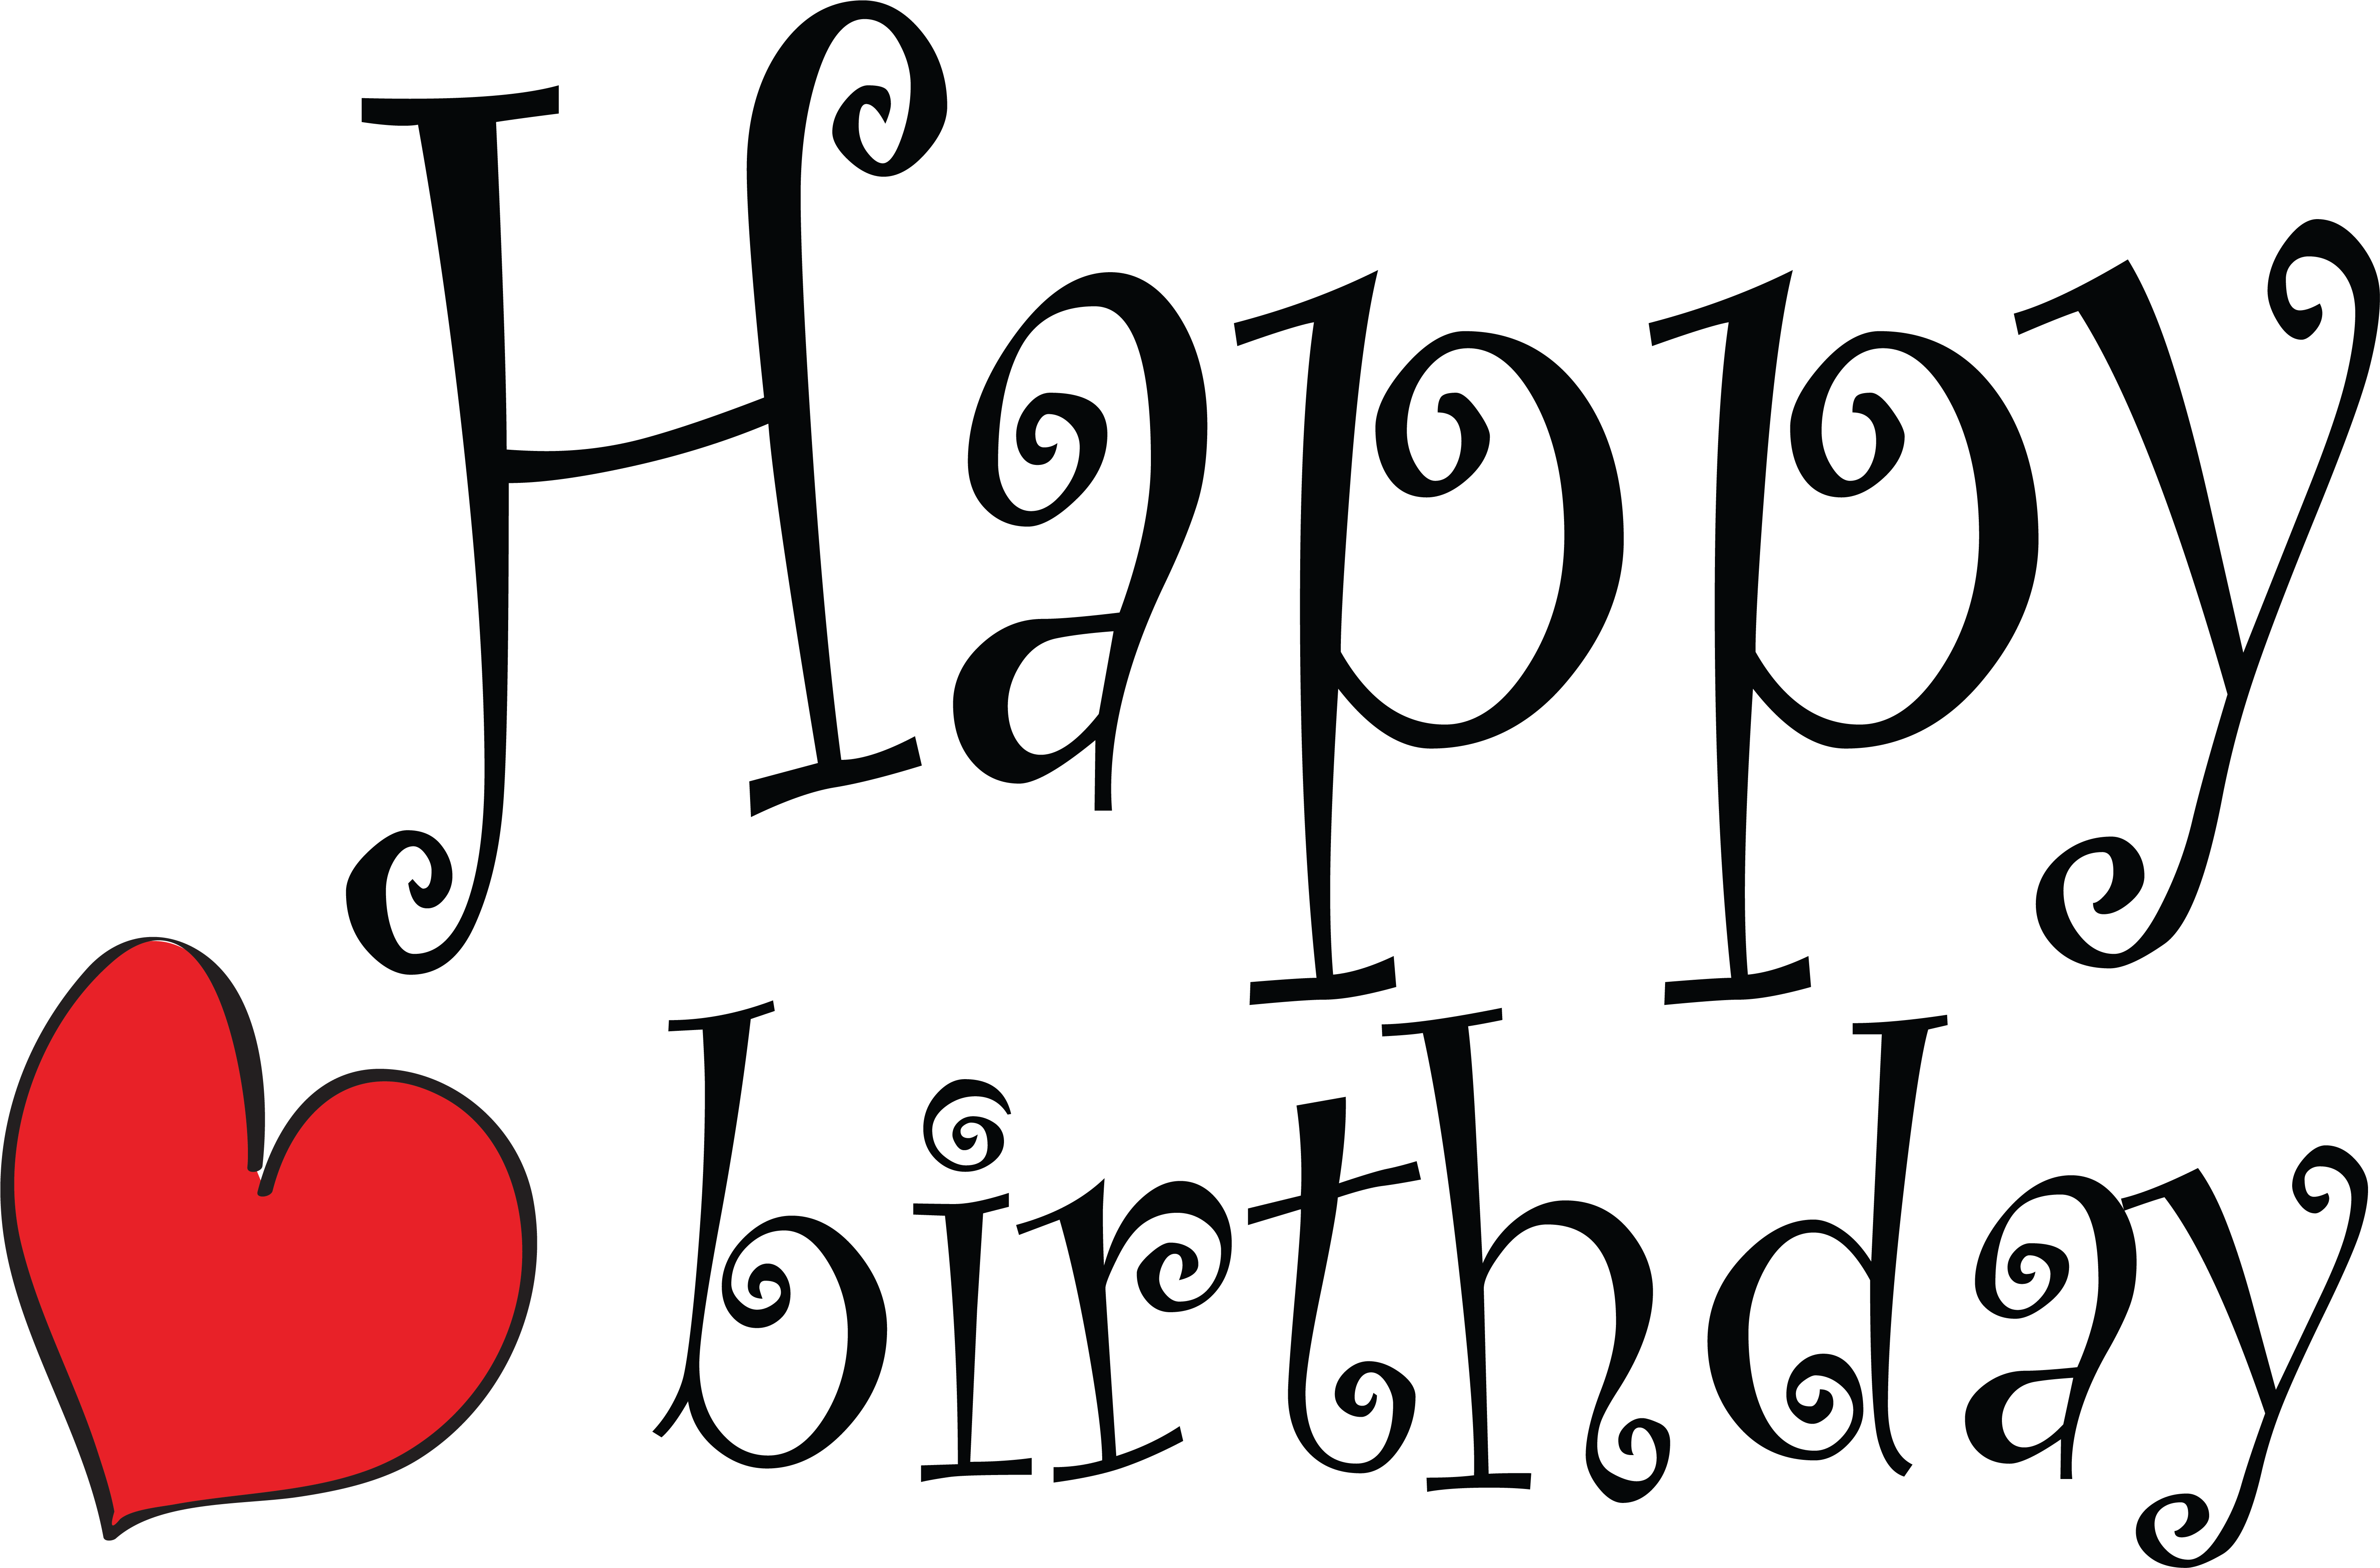 Birthday Cake Wish Greeting Card Clip Art - Happy Birthday Twin Sister! Tile Coaster (6273x4210)